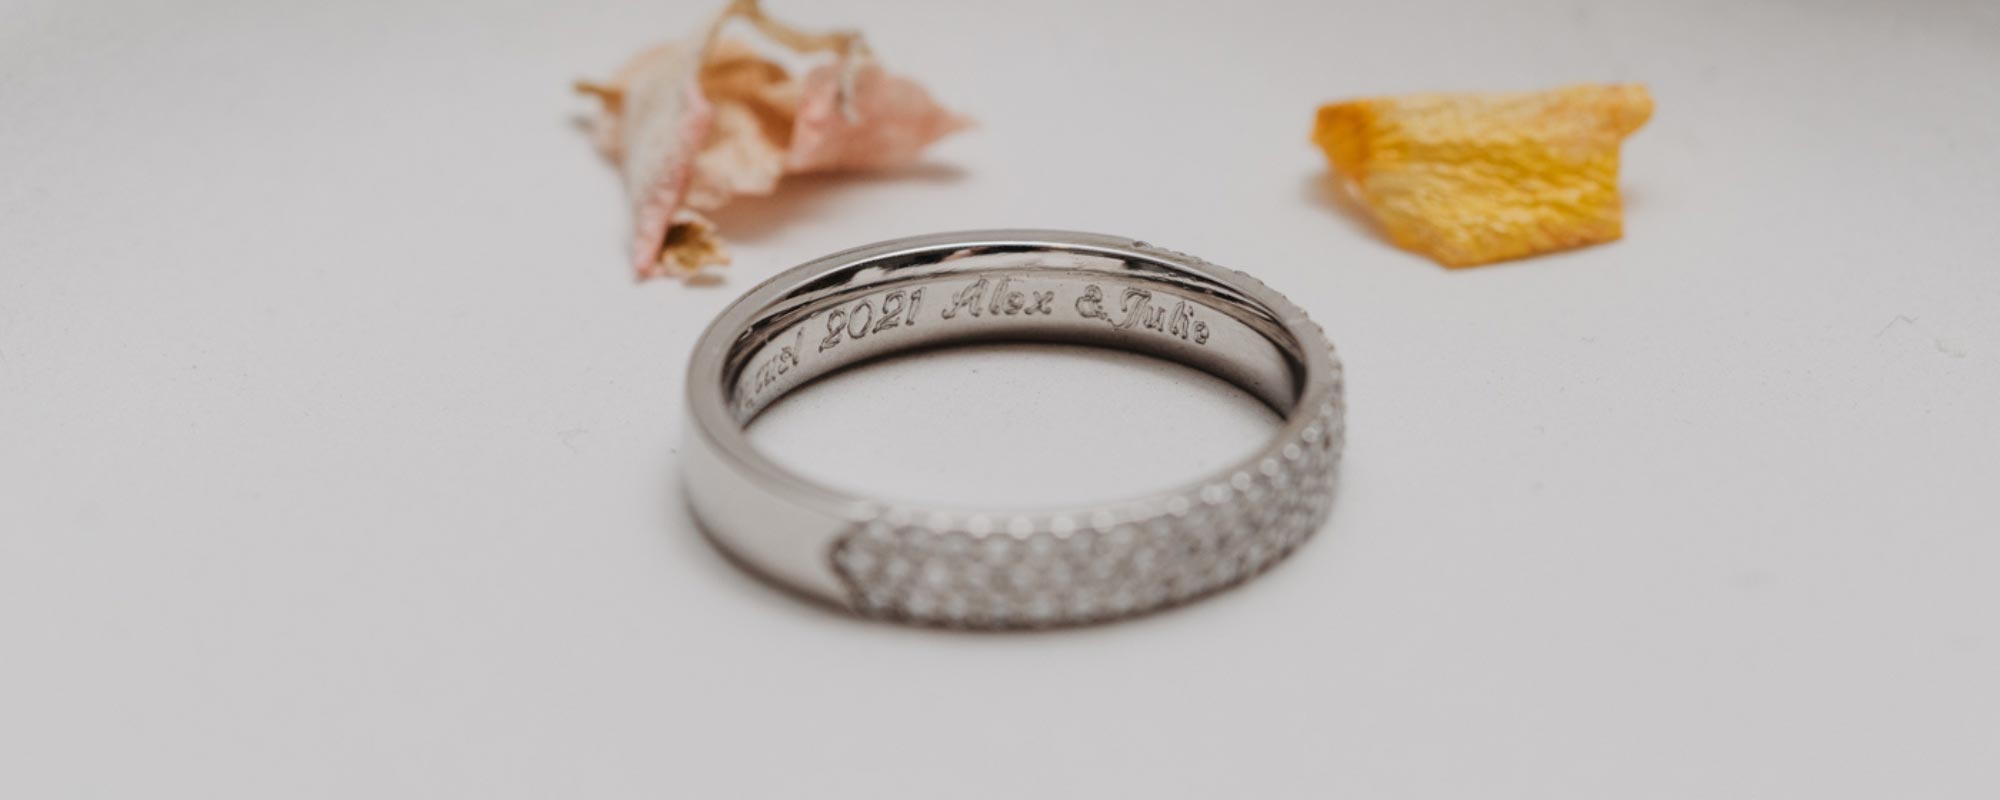 Pin by Ashleigh Stinson on Wedding Ideas | Wedding ring pictures, Wedding ring  photography, Wedding ring hand